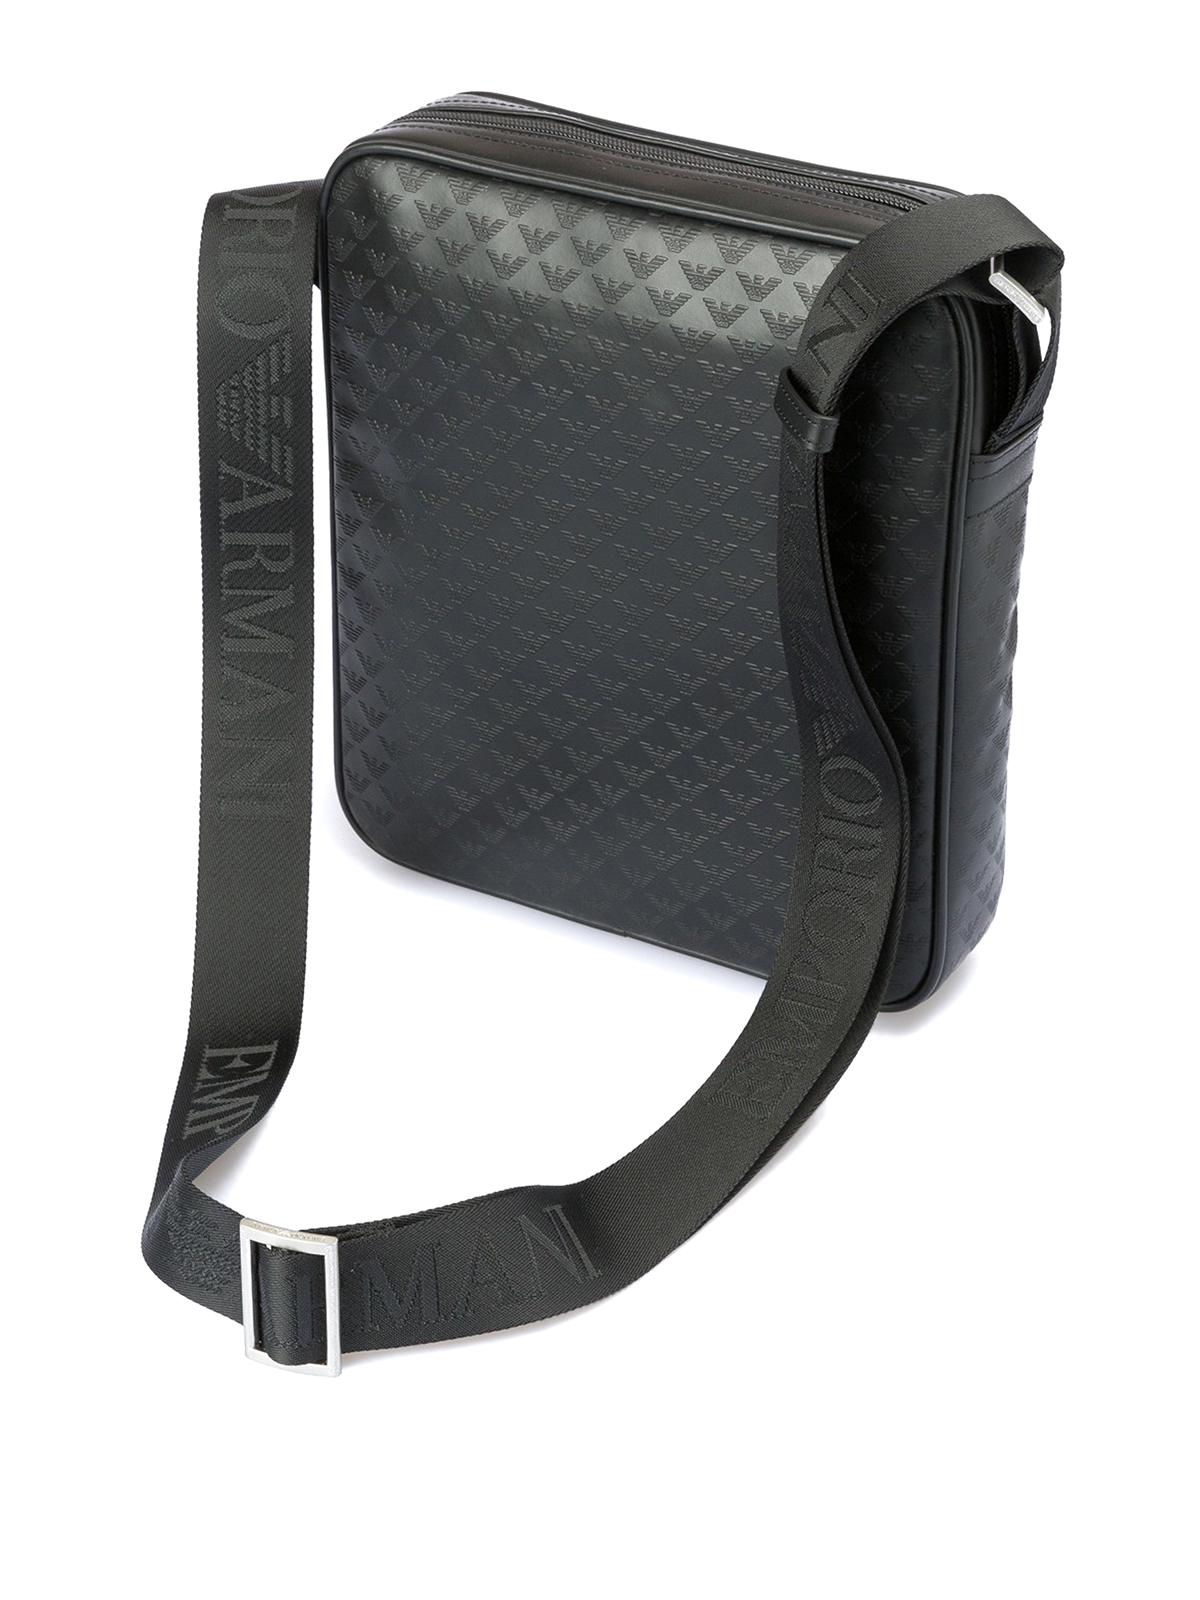 Shoulder bags Emporio Armani - Signature leather messenger bag -  YAM155YCO4380001